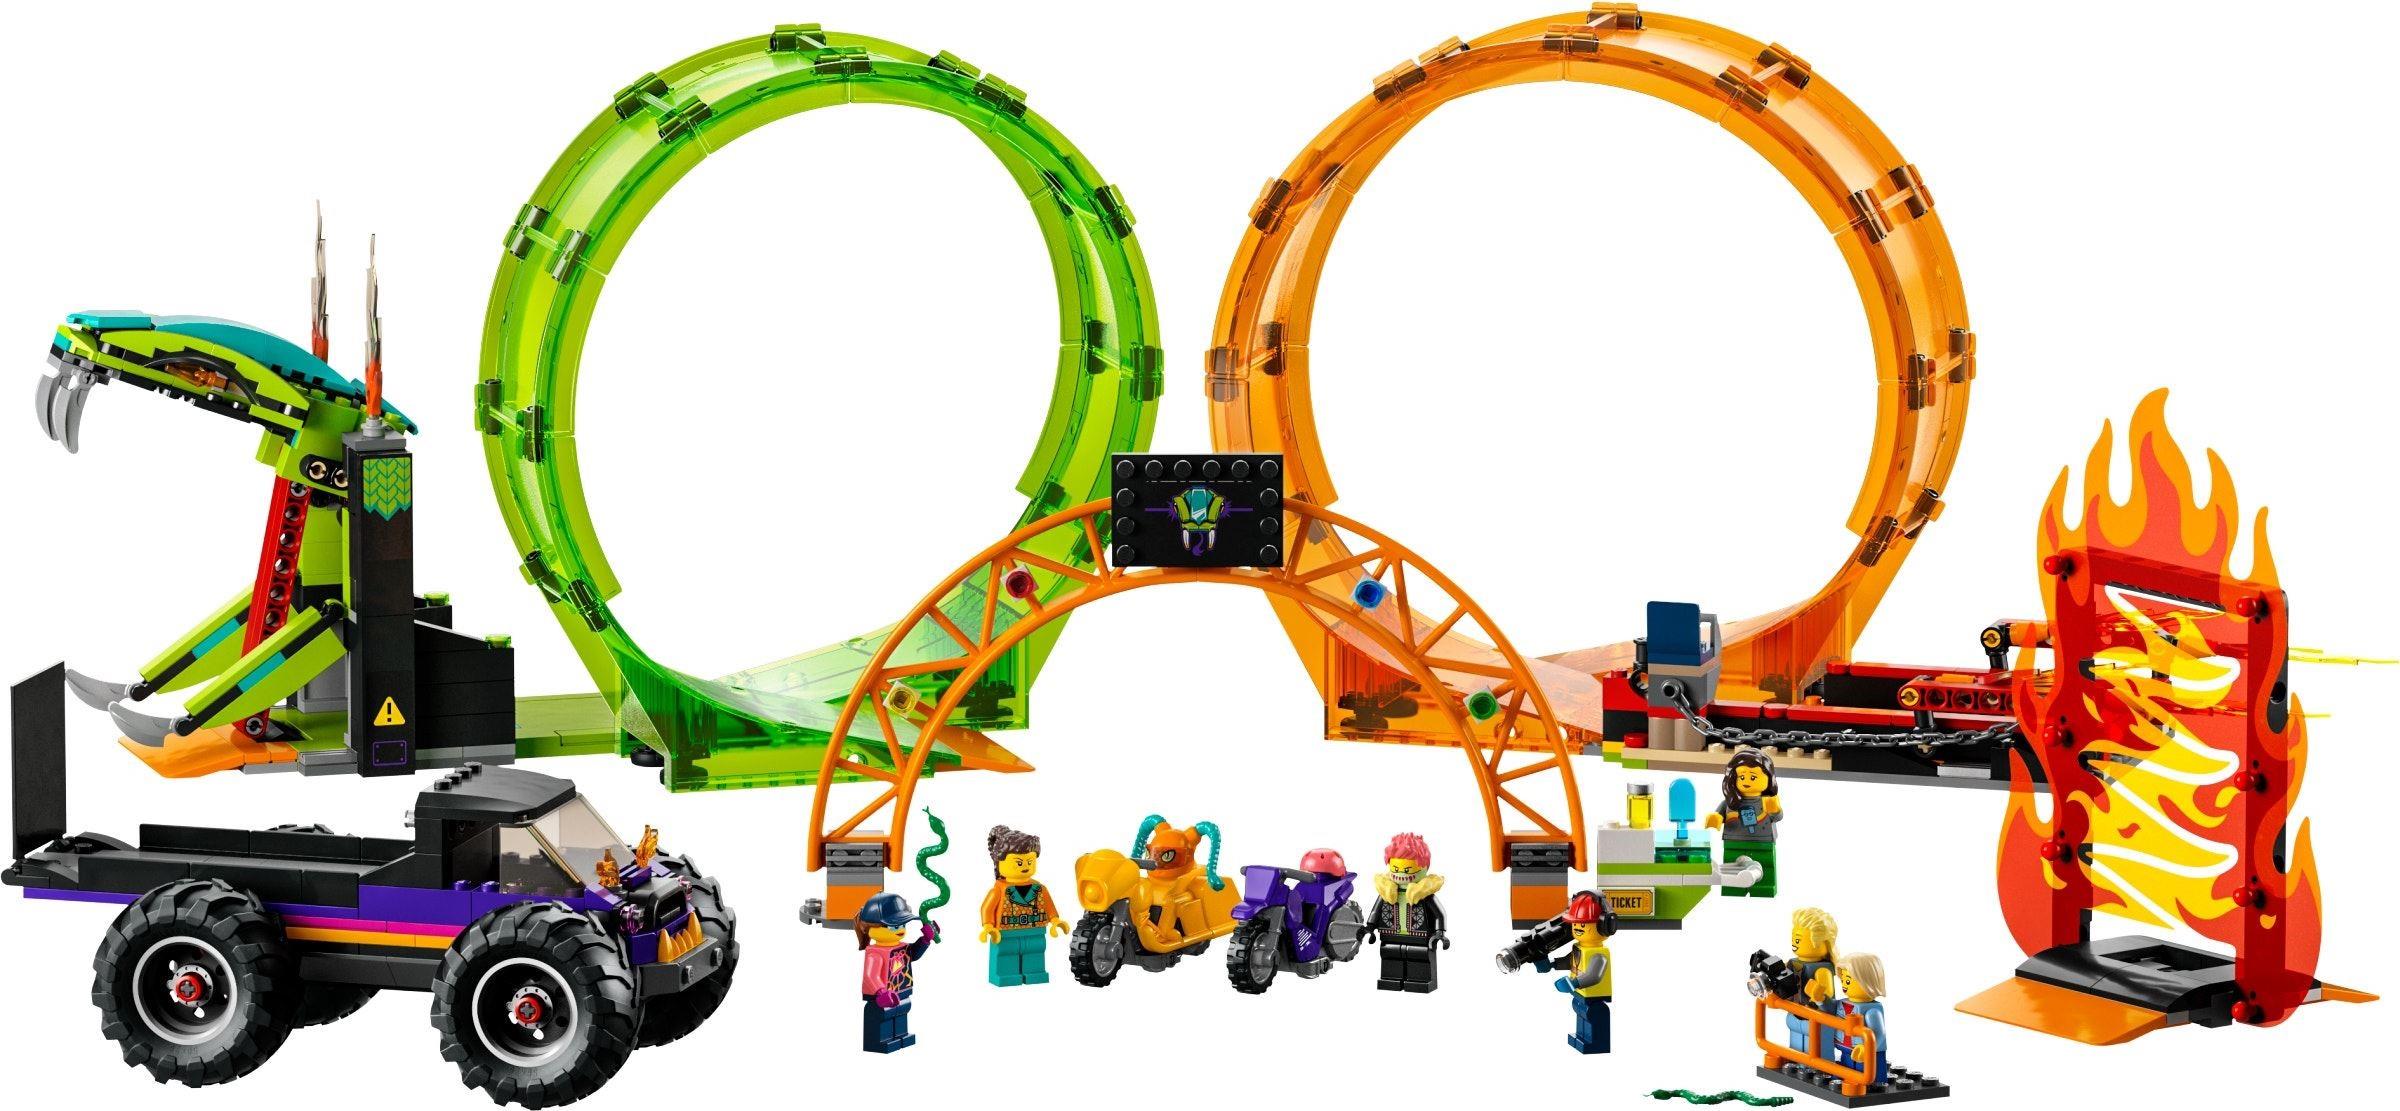 LEGO City Stuntz Smashing Chimpanzee Stunt Loop 60338 Building Toy Set for  Boys, Girls, and Kids Ages 7+ (226 Pieces)